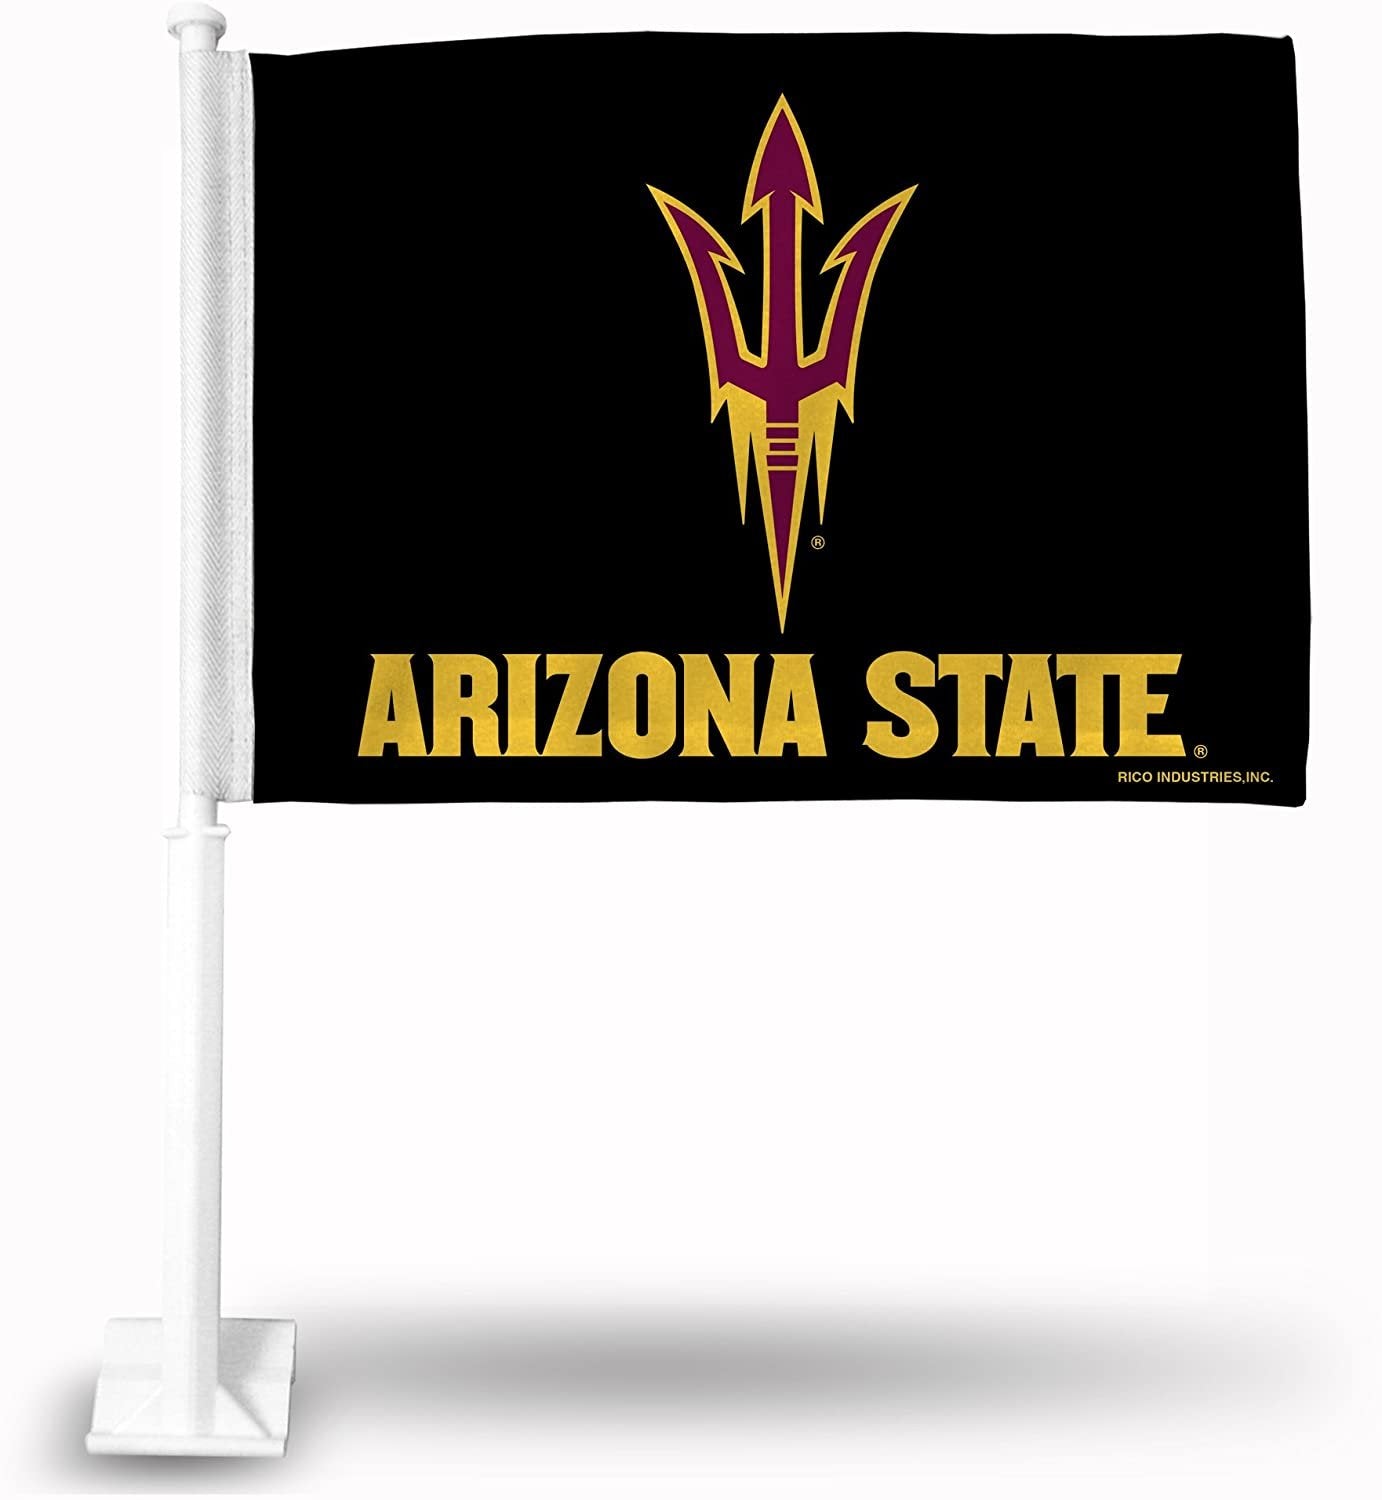 NCAA Arizona State Sun Devils Car Flag with included Pole